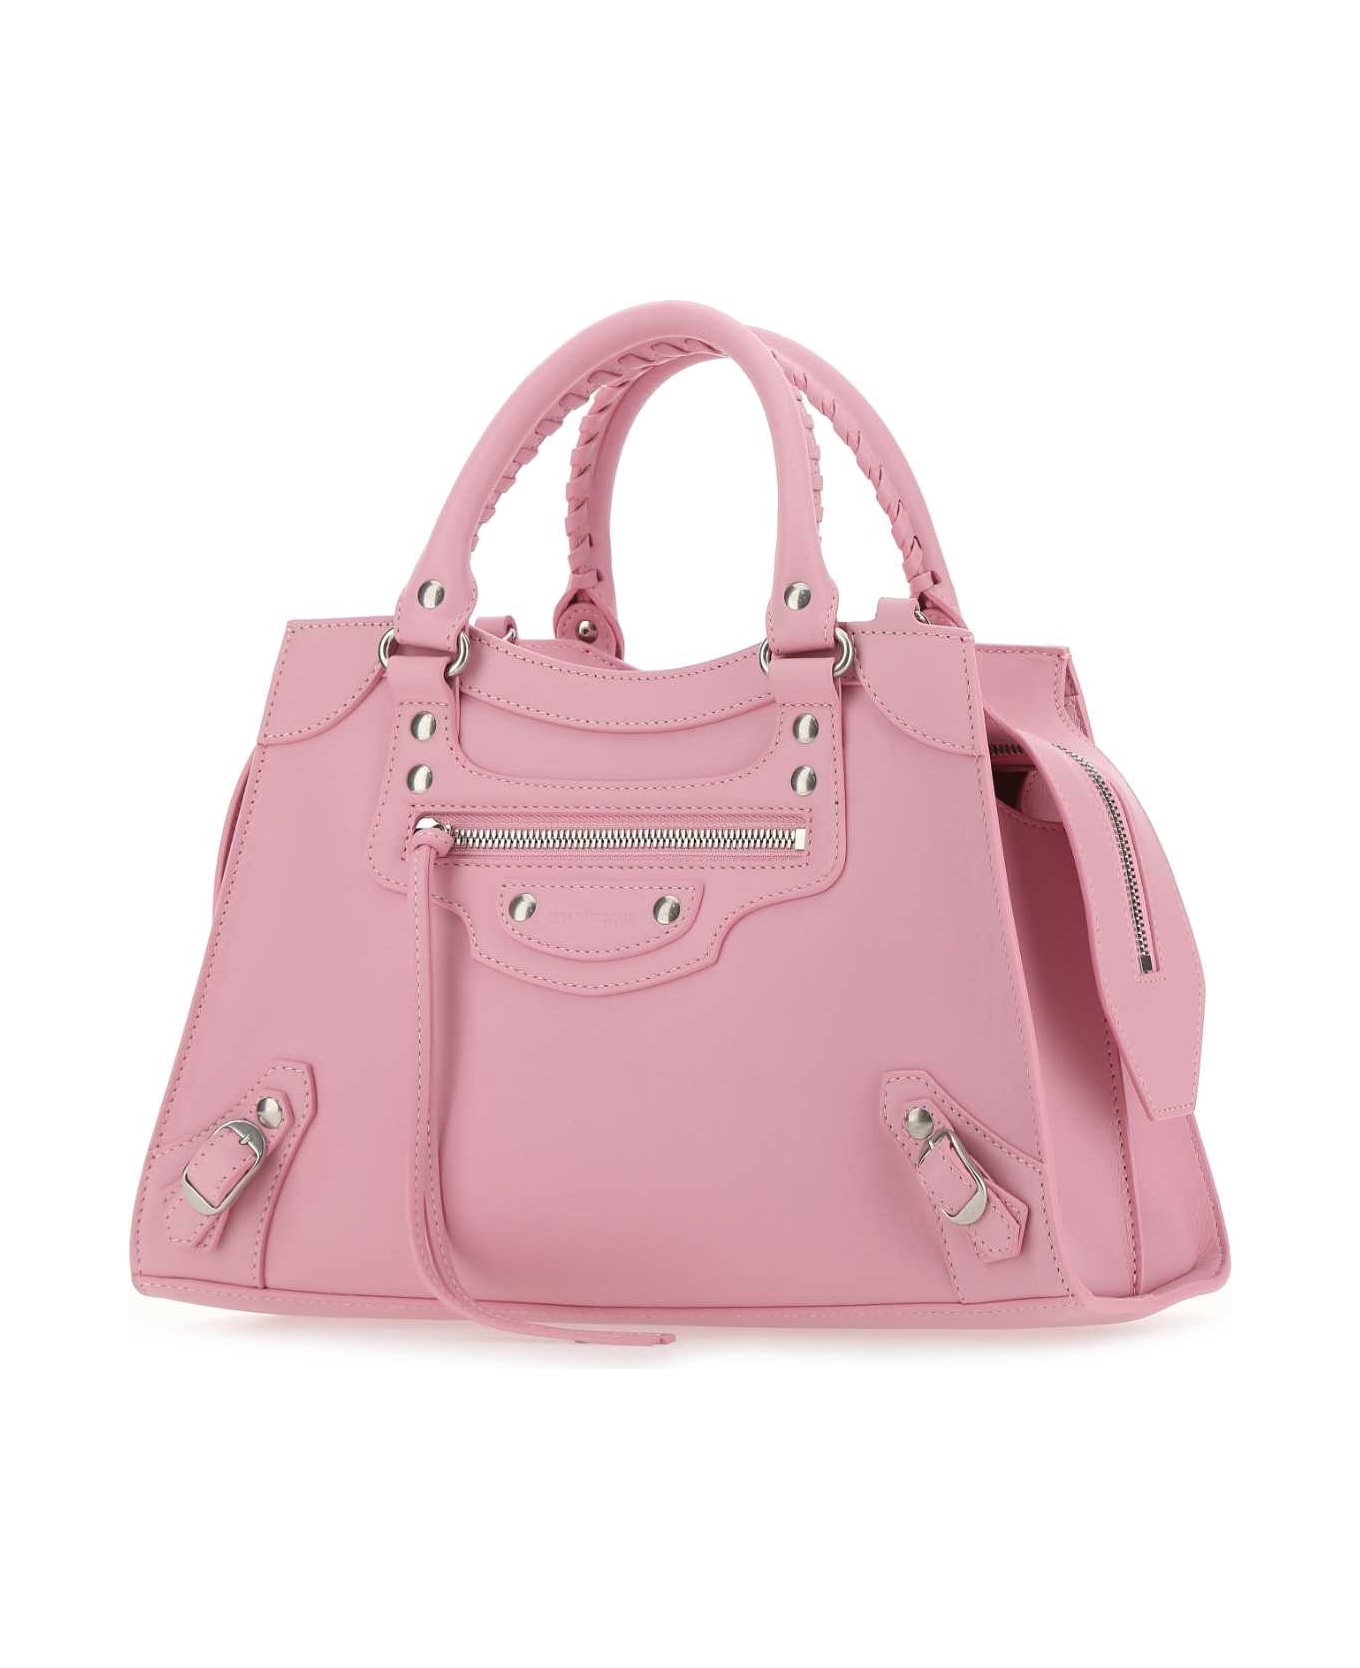 Balenciaga Pink Leather S Neo Classic Handbag - 5906